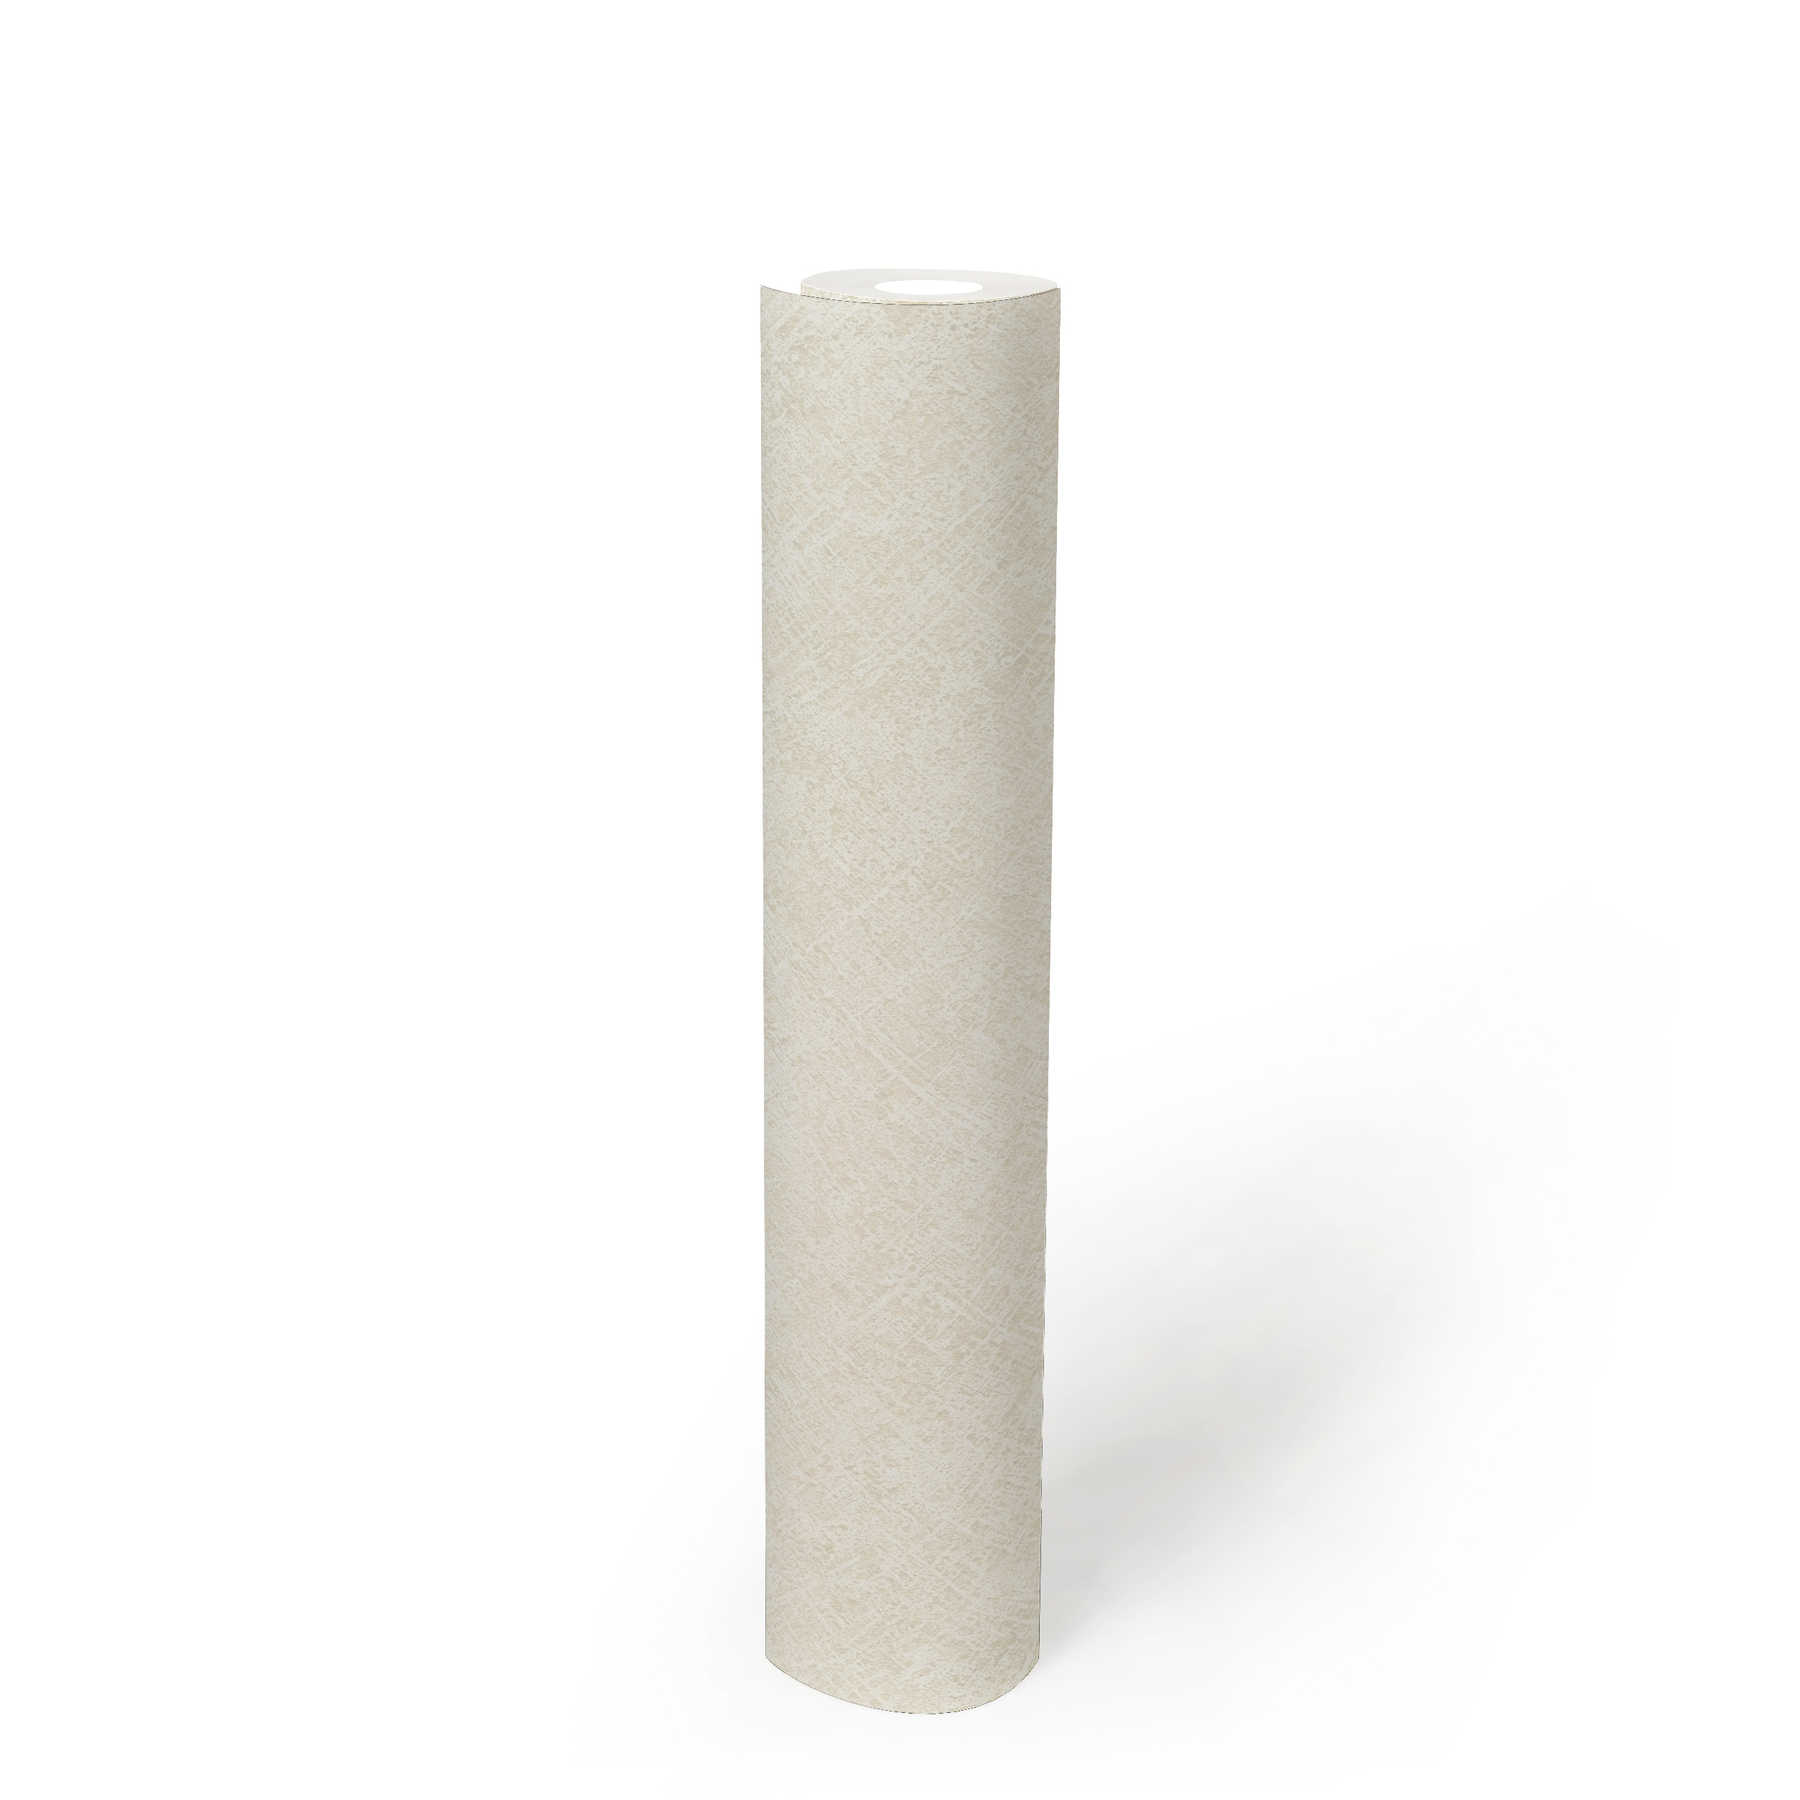             Stone optics wallpaper cream plain with chalk stone optics
        